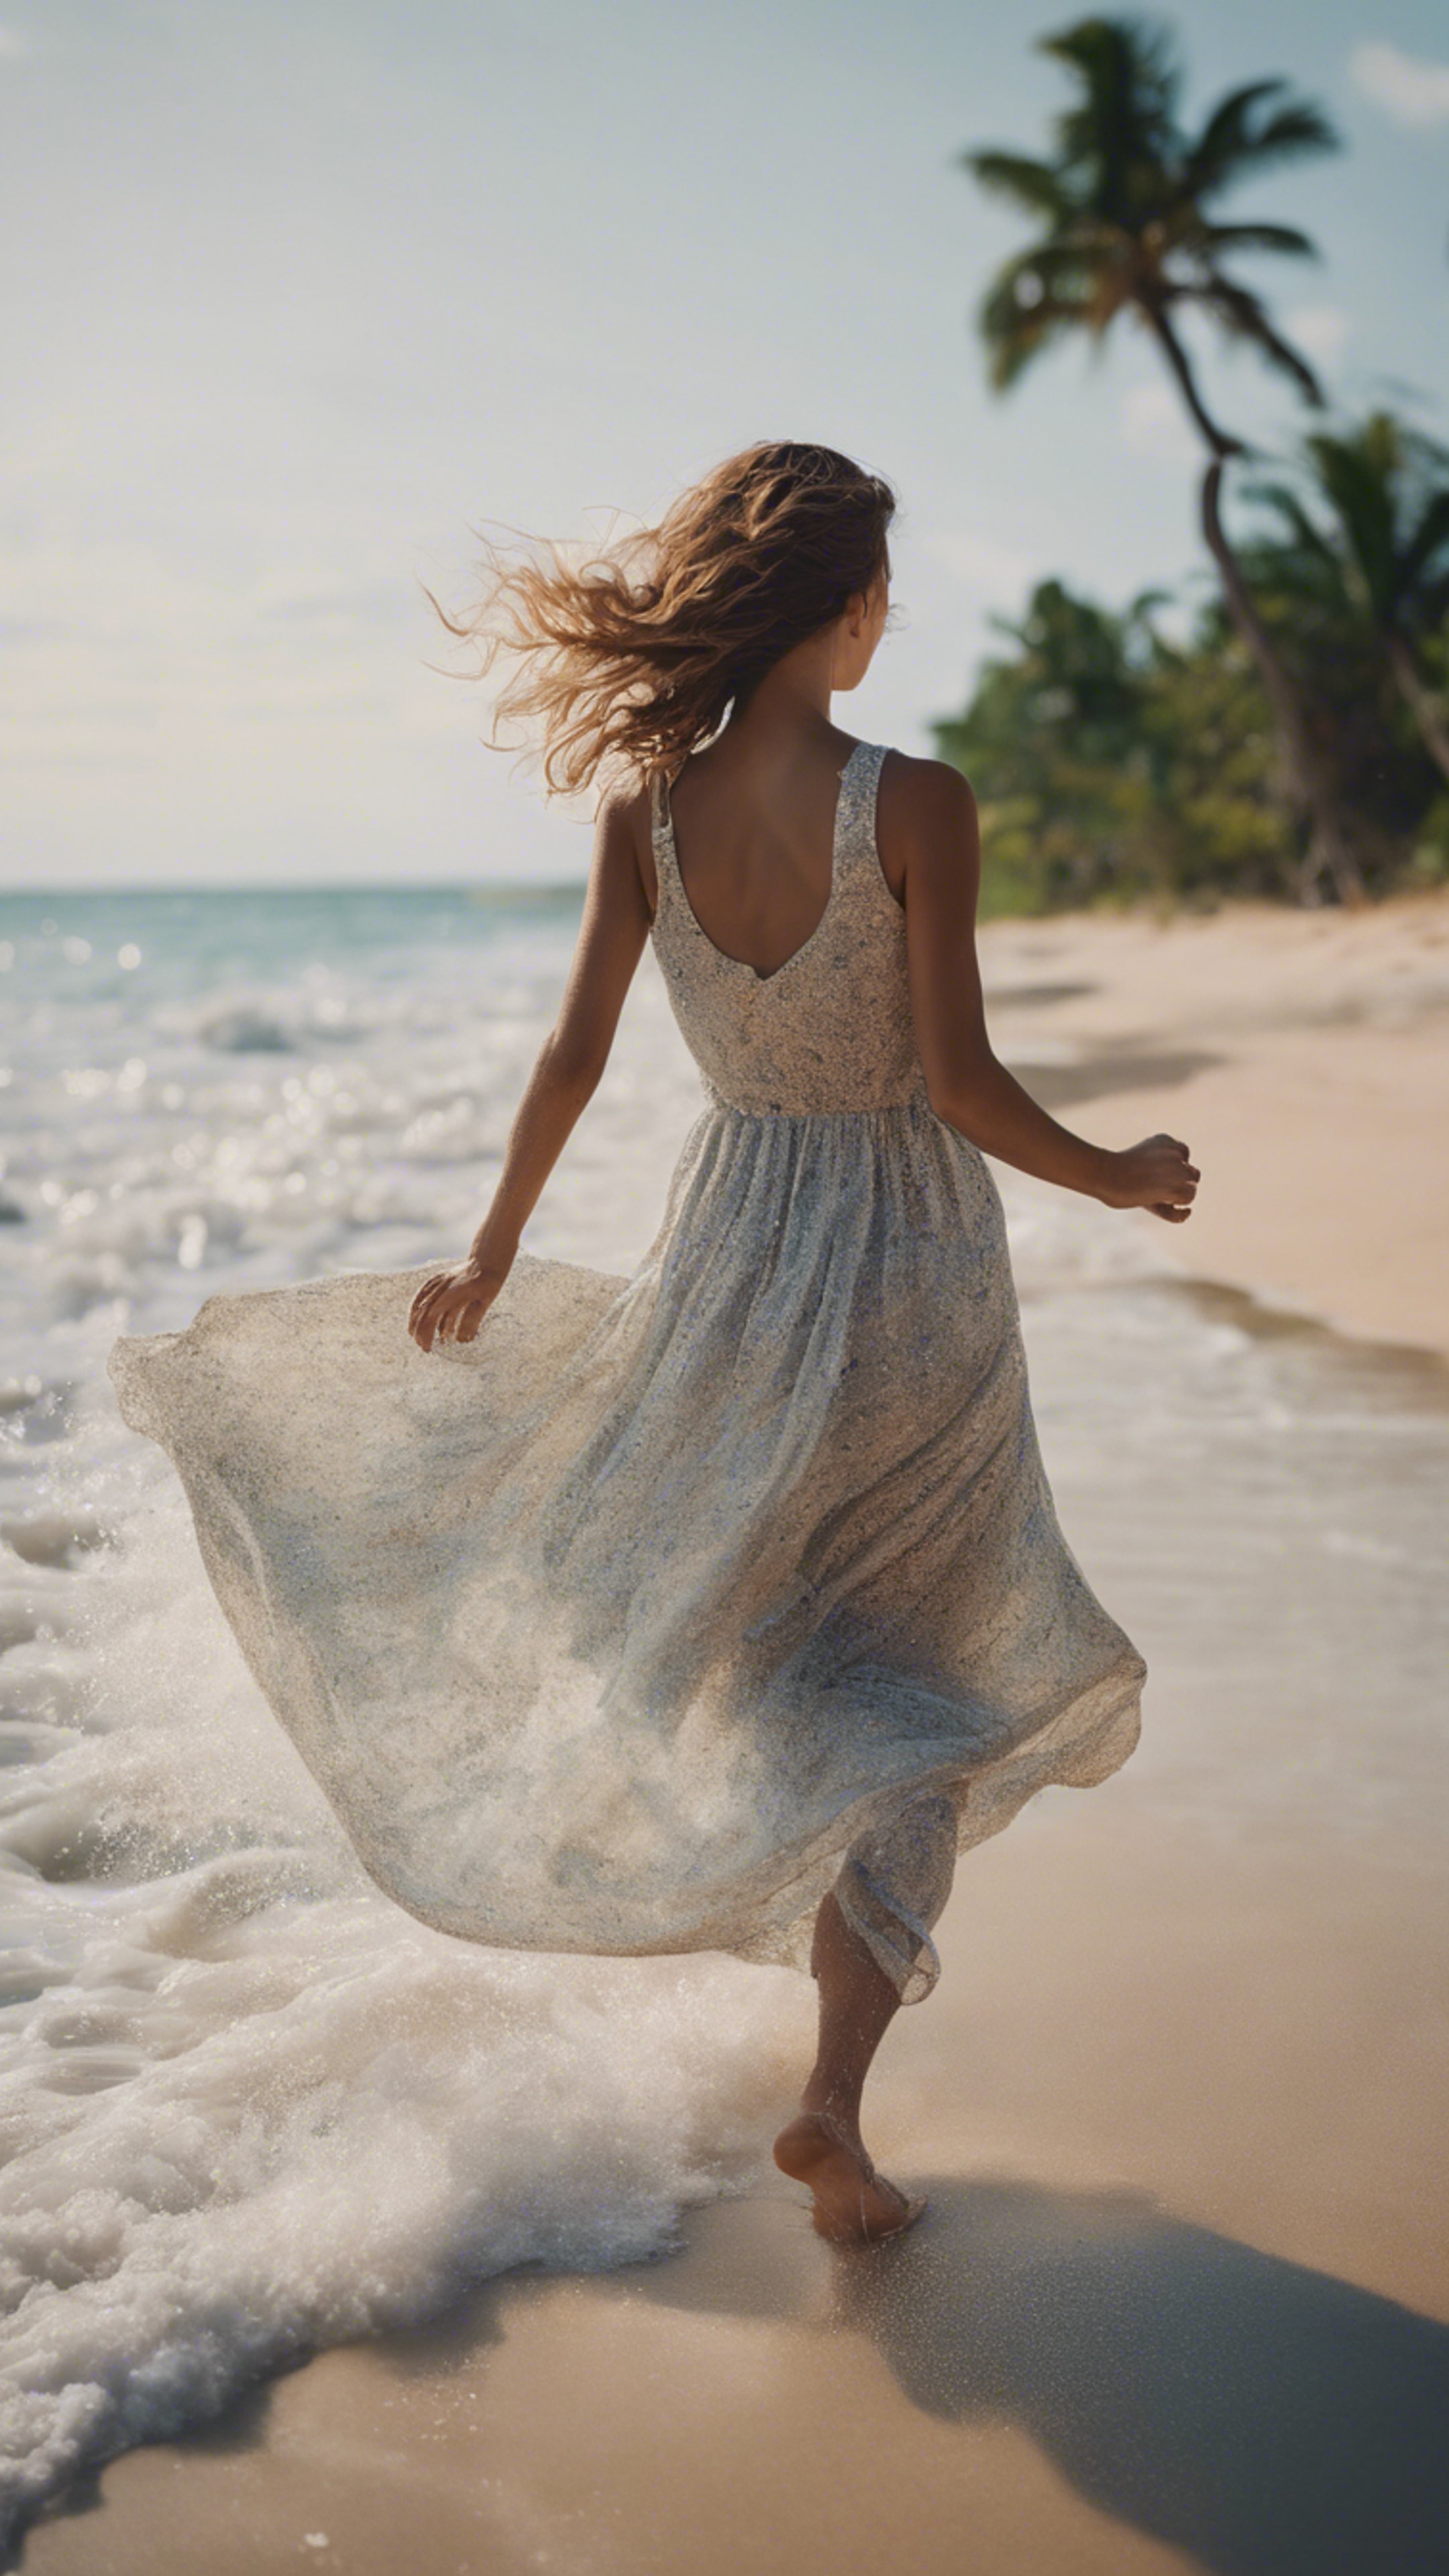 A girl in a flowy dress running alongside the sea at a tropical beach. Tapet[6de970100921406193d7]